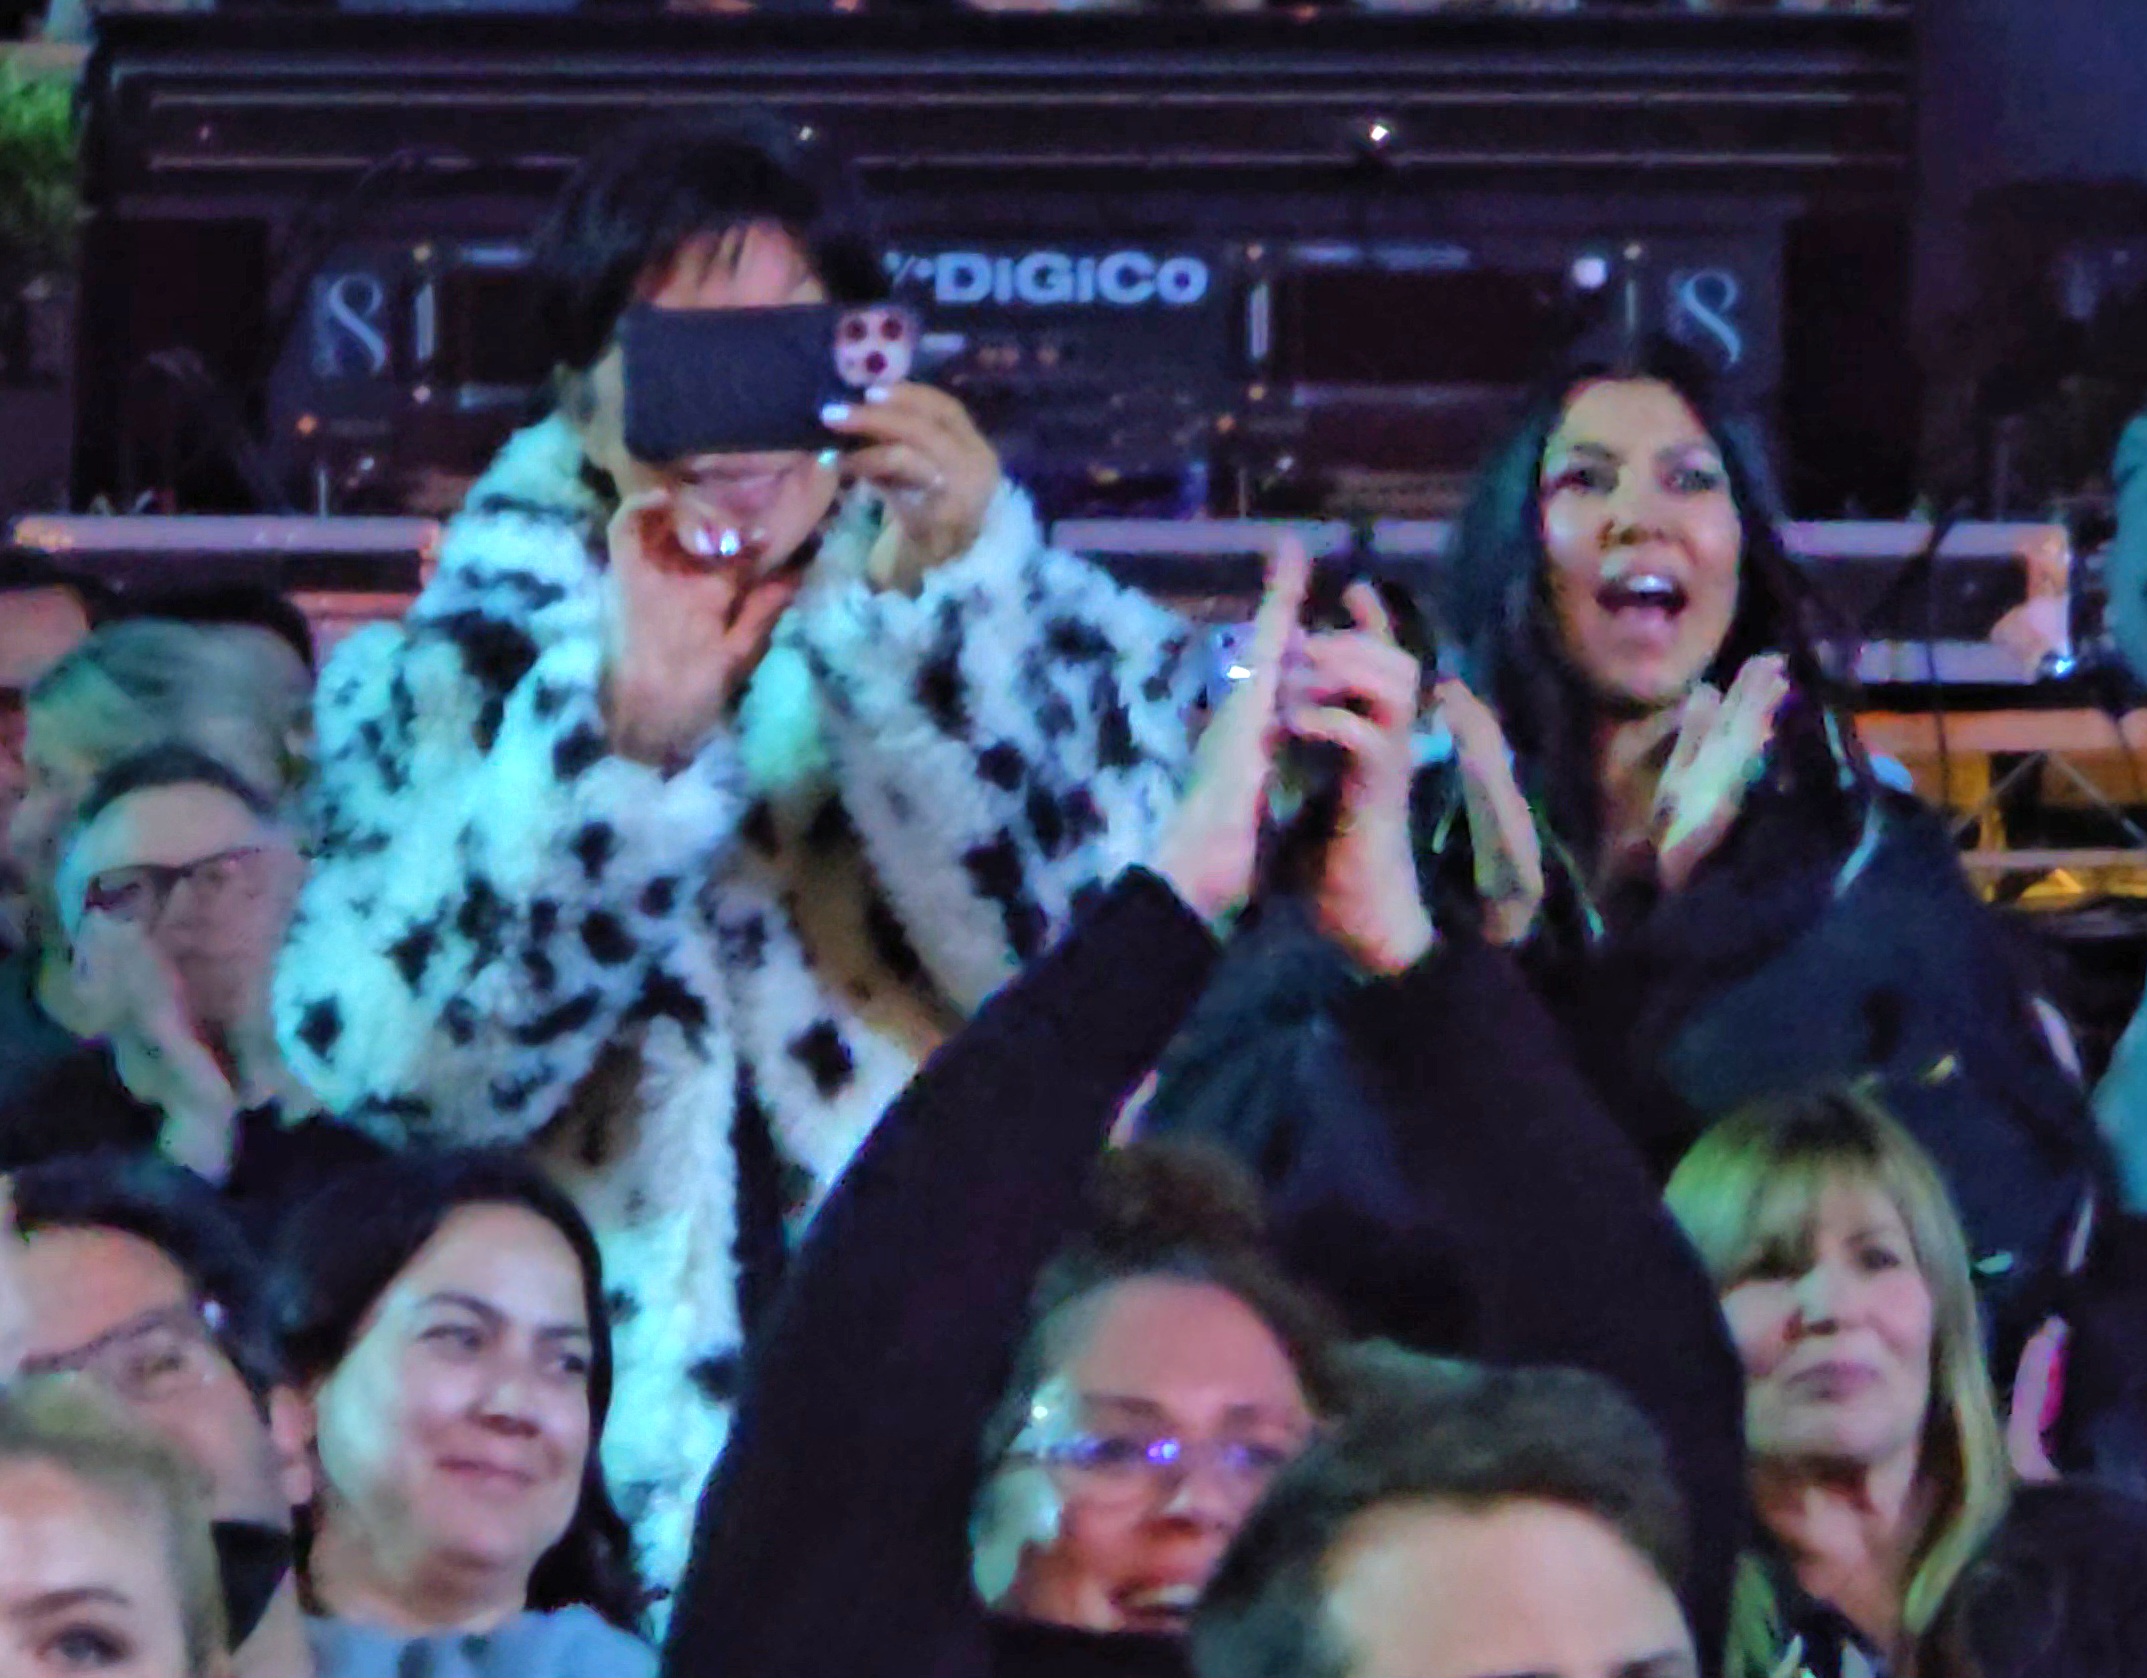 Kris Jenner smiled as she held her phone aloft to capture her granddaughter's big moment